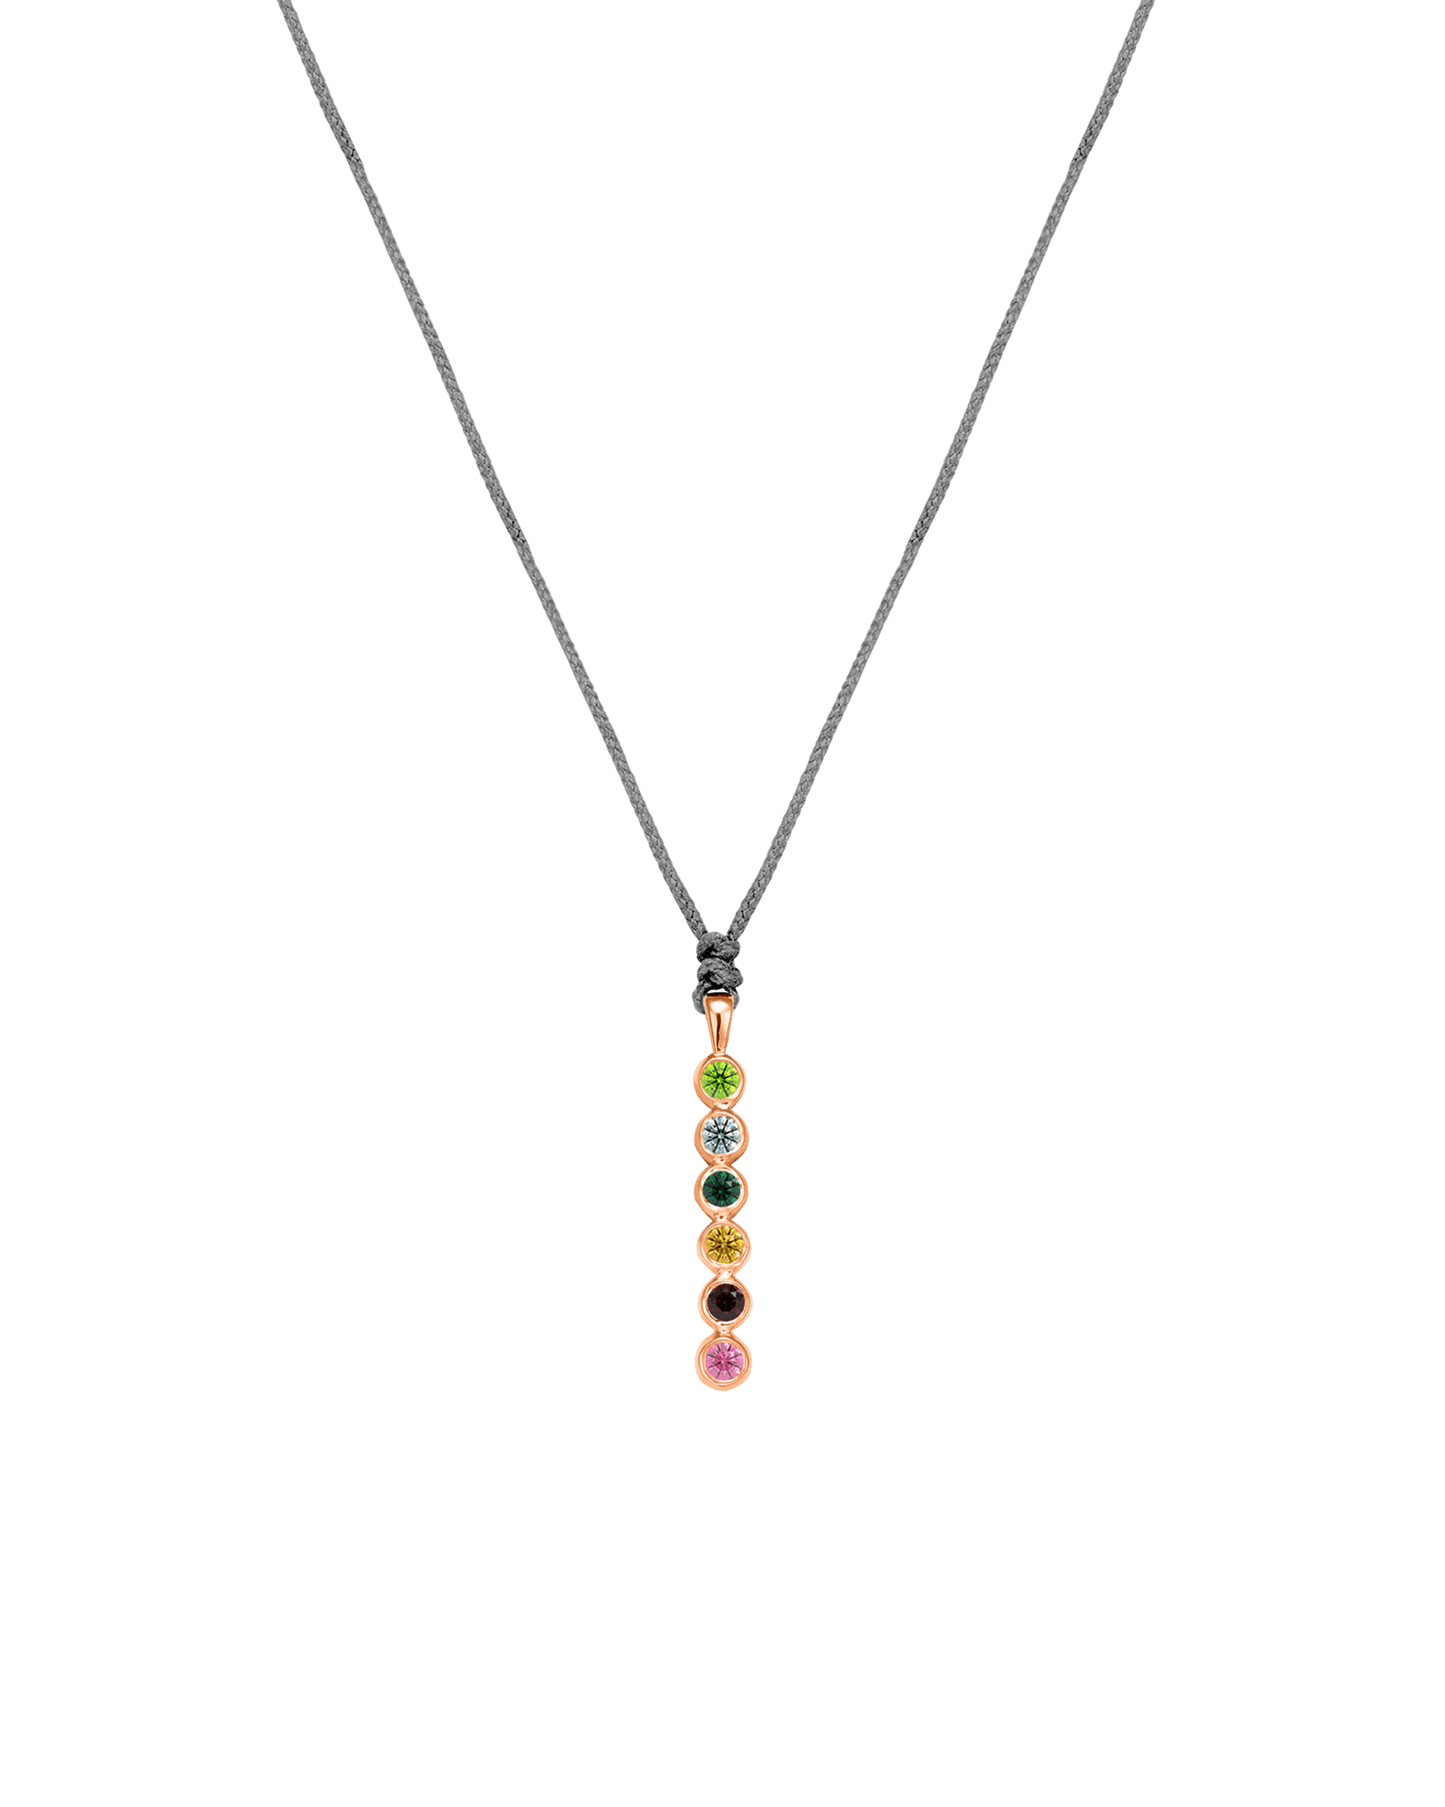 The Birthstones Bar Necklace - 14K Rose Gold Necklaces 14K Solid Gold Grey 2 